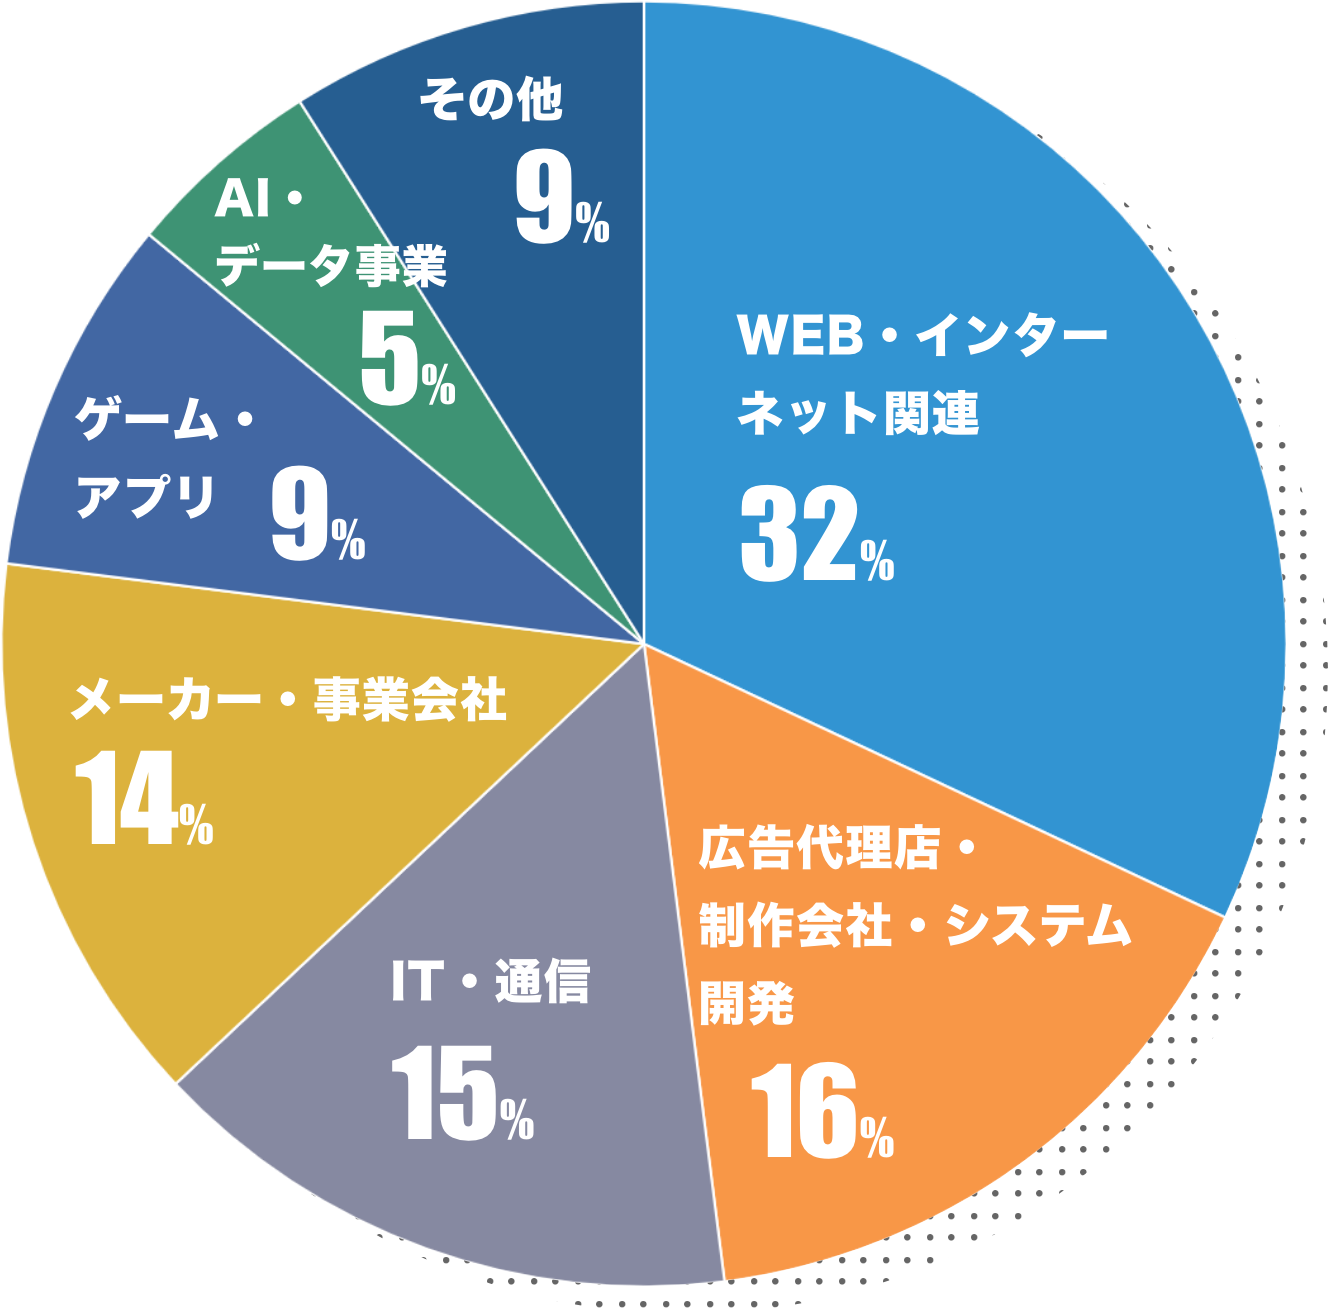 WEB・インターネット関連 32% 広告代理店・制作会社・システム開発 16% IT・通信 15% メーカー・事業会社 14% ゲーム・アプリ 9% AI・データ事業 5% その他 9%